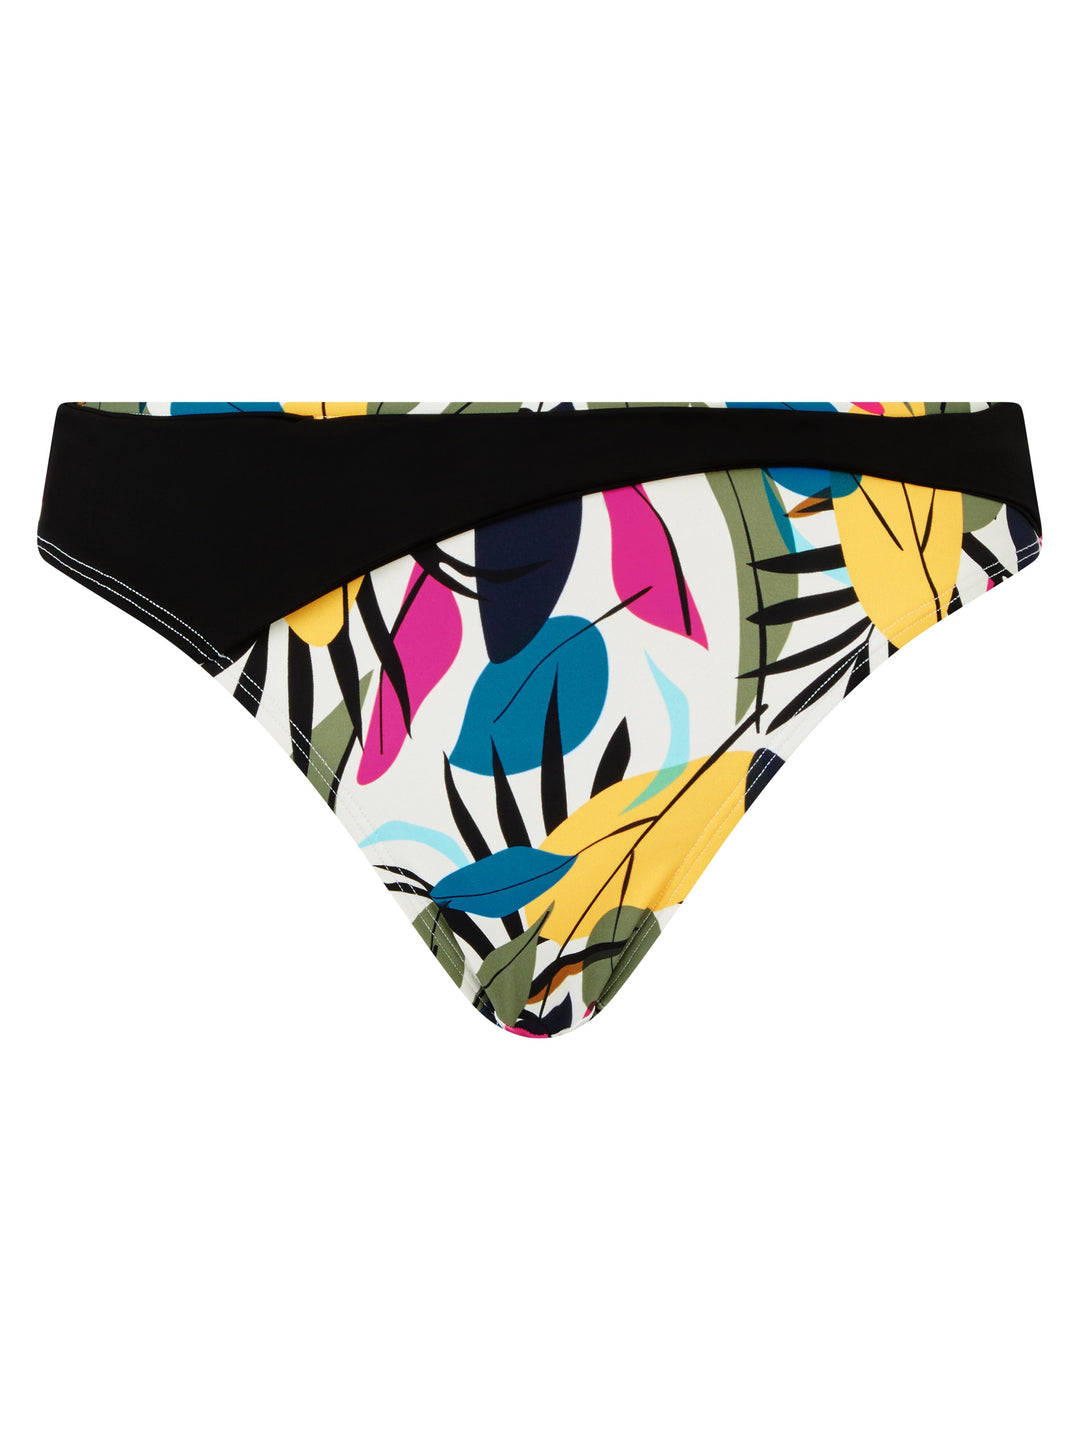 Femilet Swimwear - Honduras Bikini Brief Multicolor Leaves Bikini Brief Femilet Swimwear 